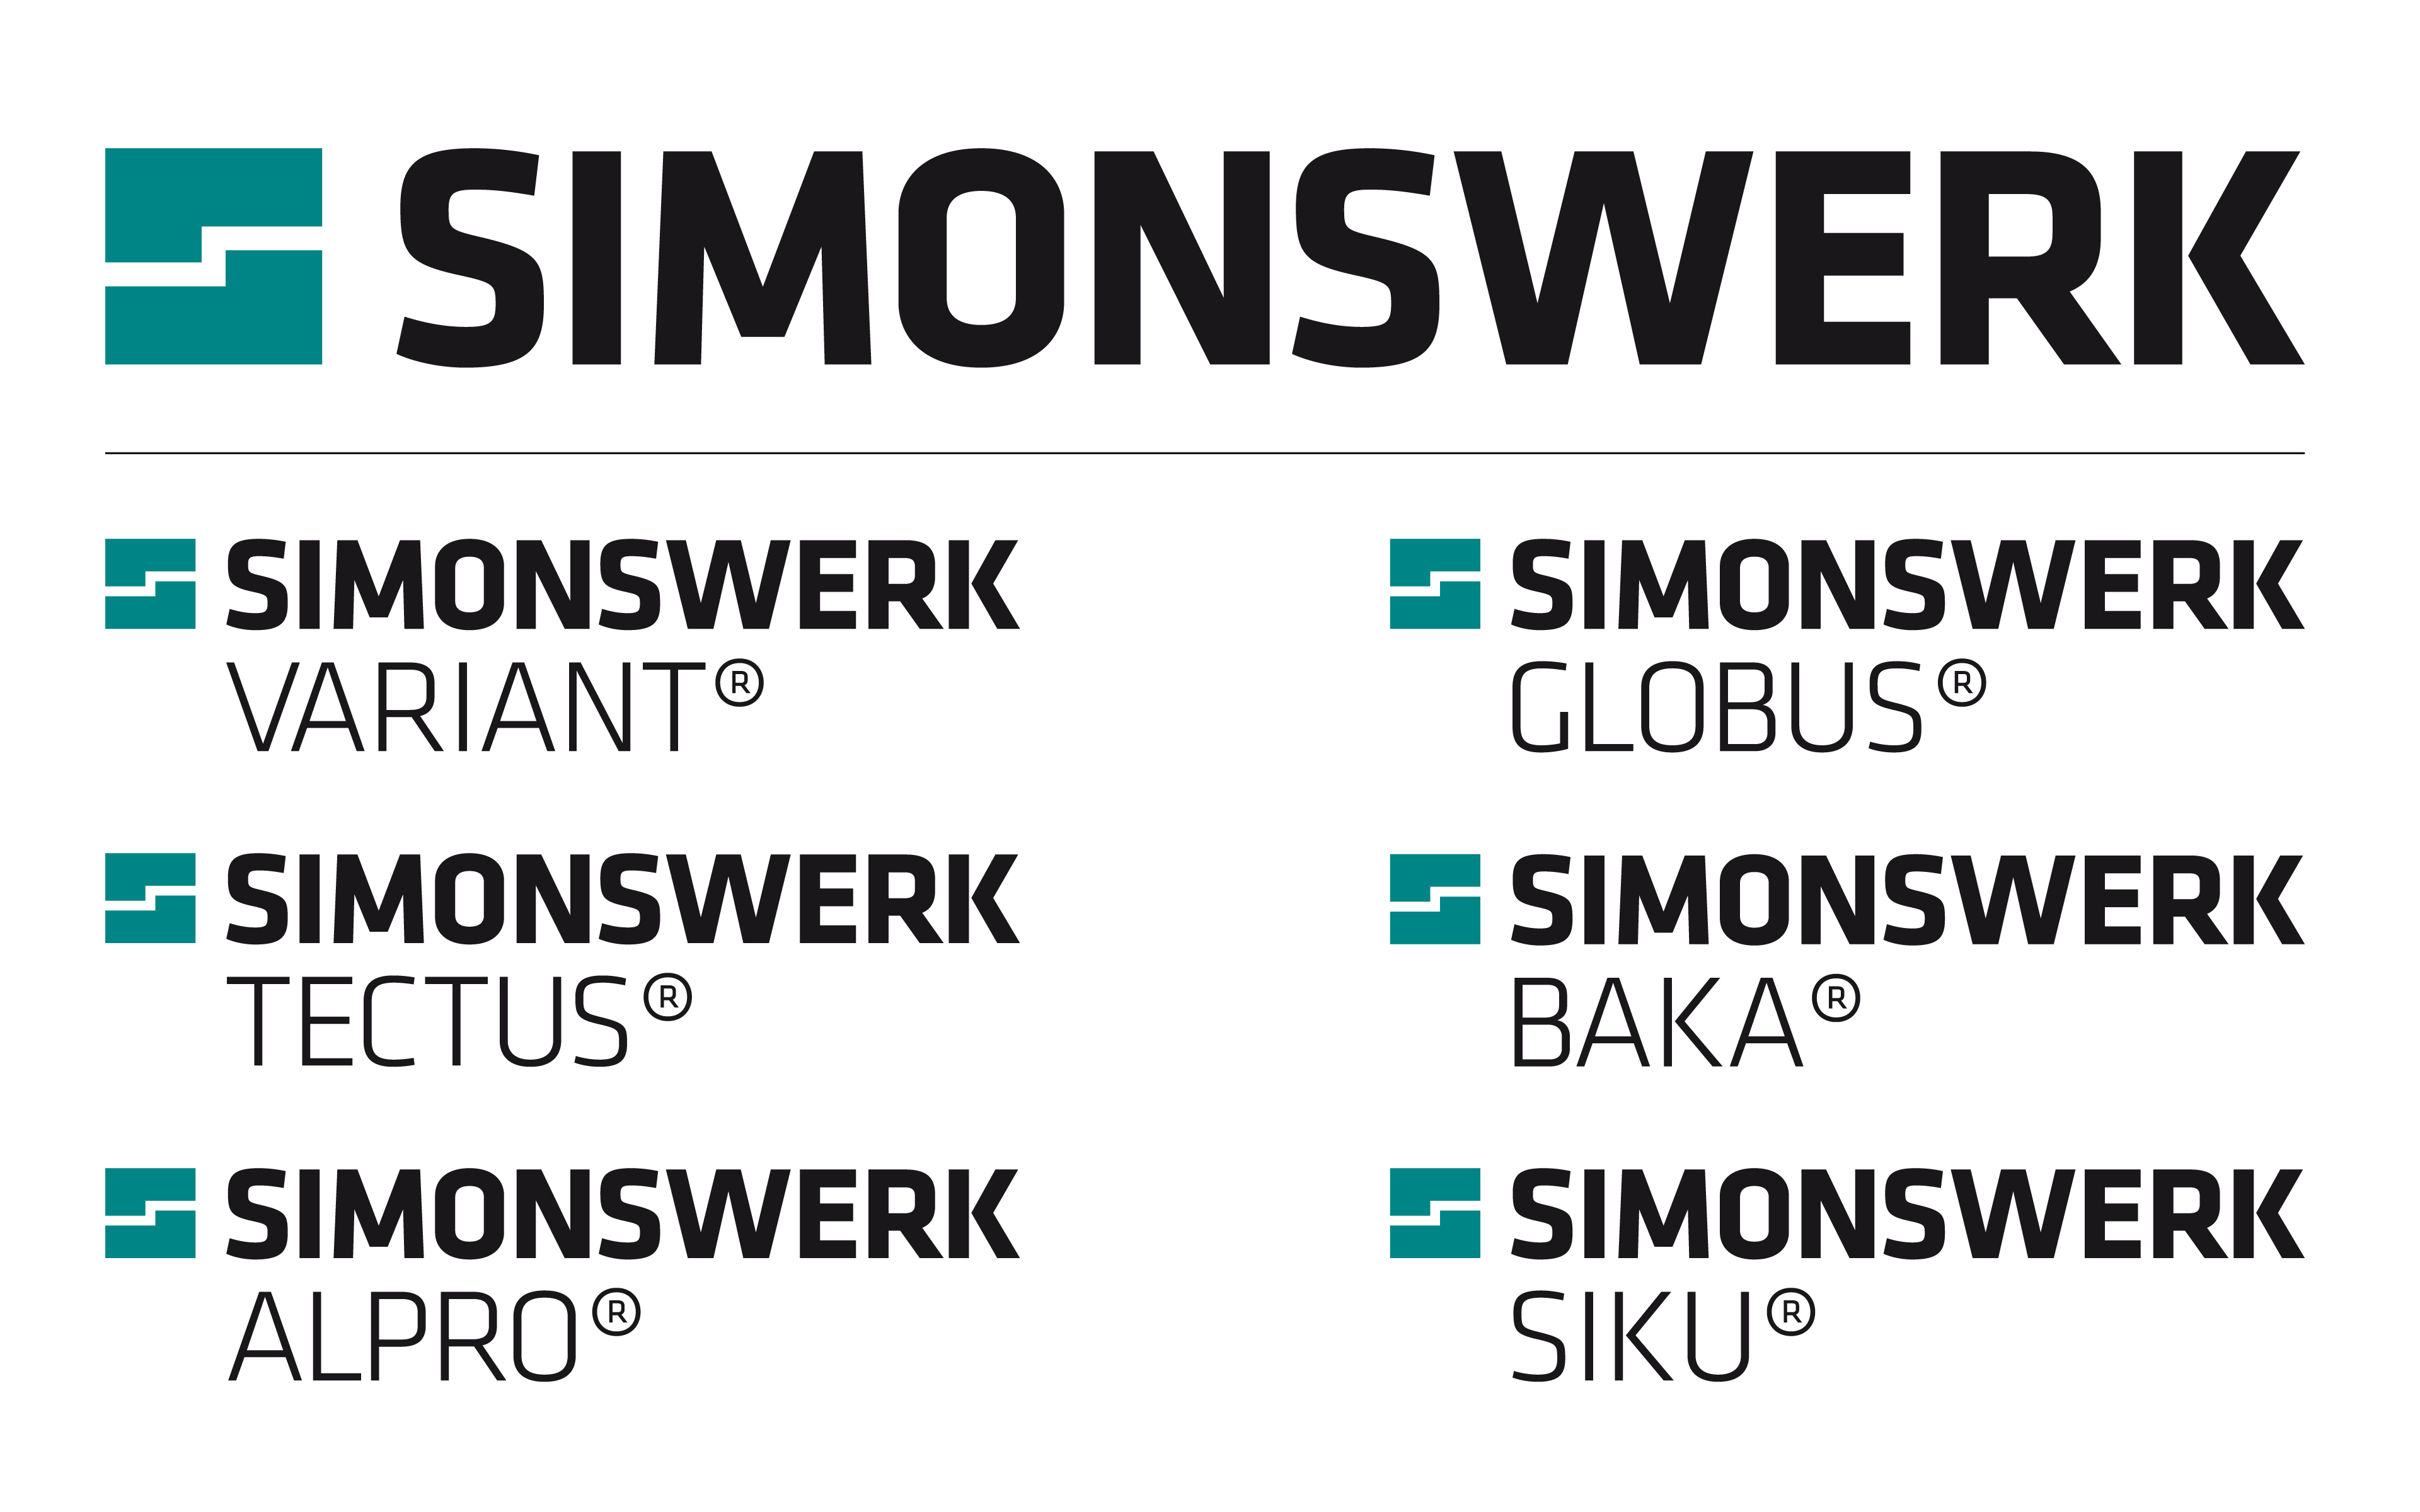 Simonswerk Corporate Design, Markenarchitektur